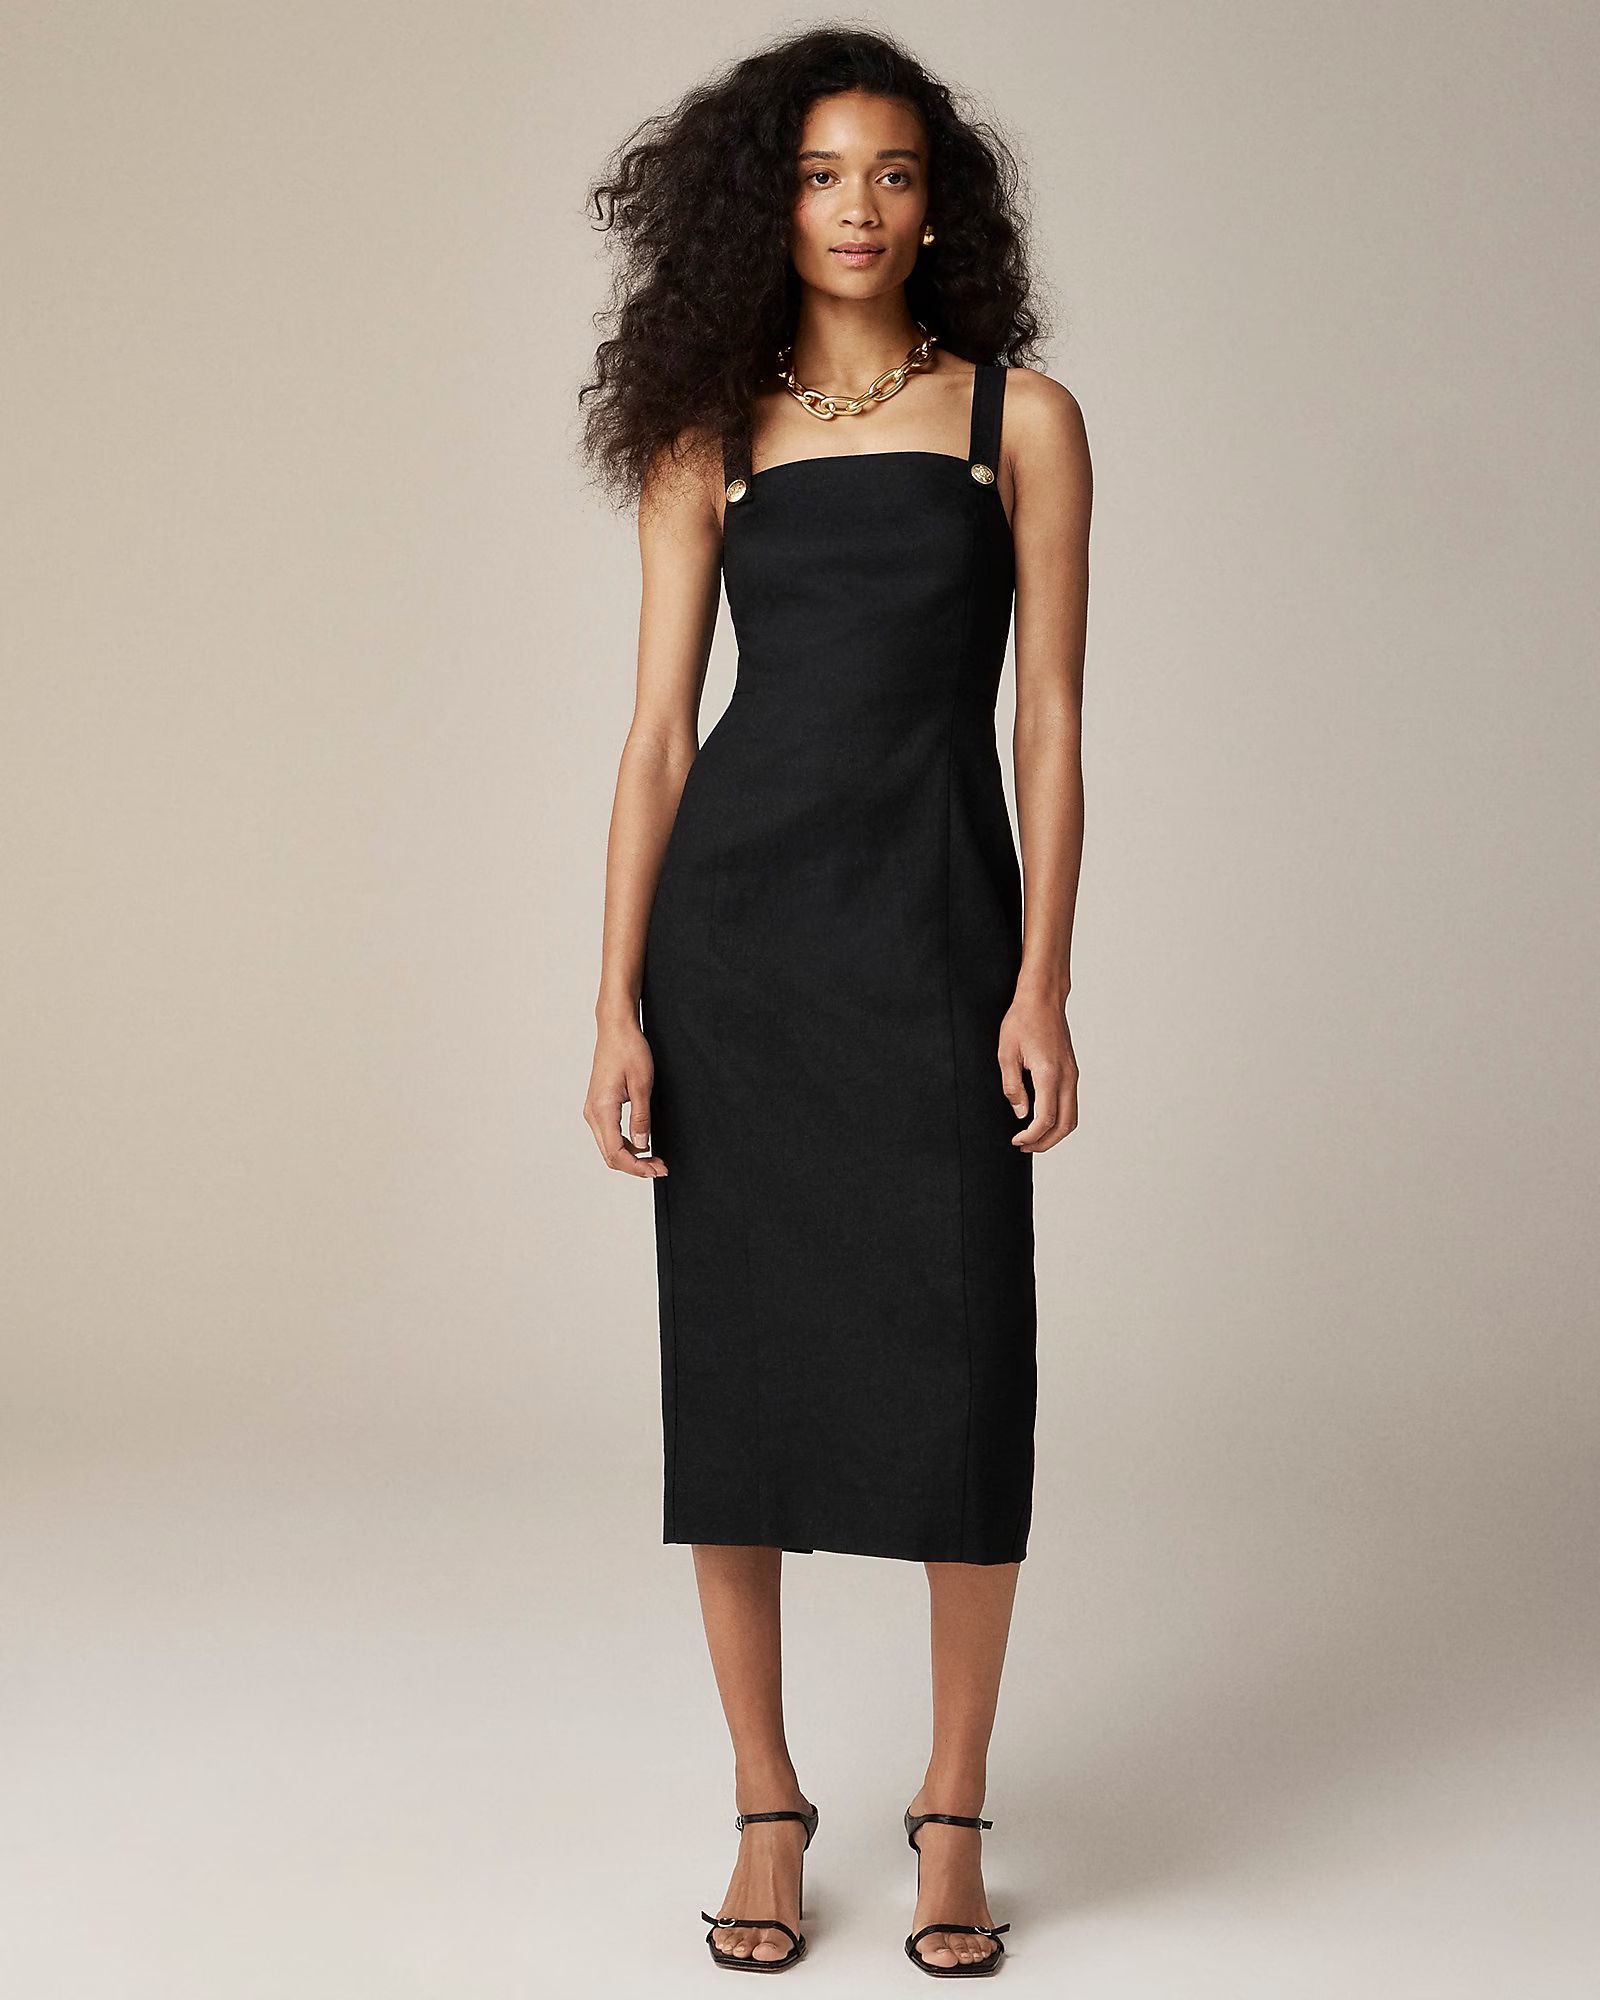 newStretch linen-blend sheath dress$134.50$228.00 (41% Off)Dress Event. 40% off.BlackSelect a siz... | J.Crew US